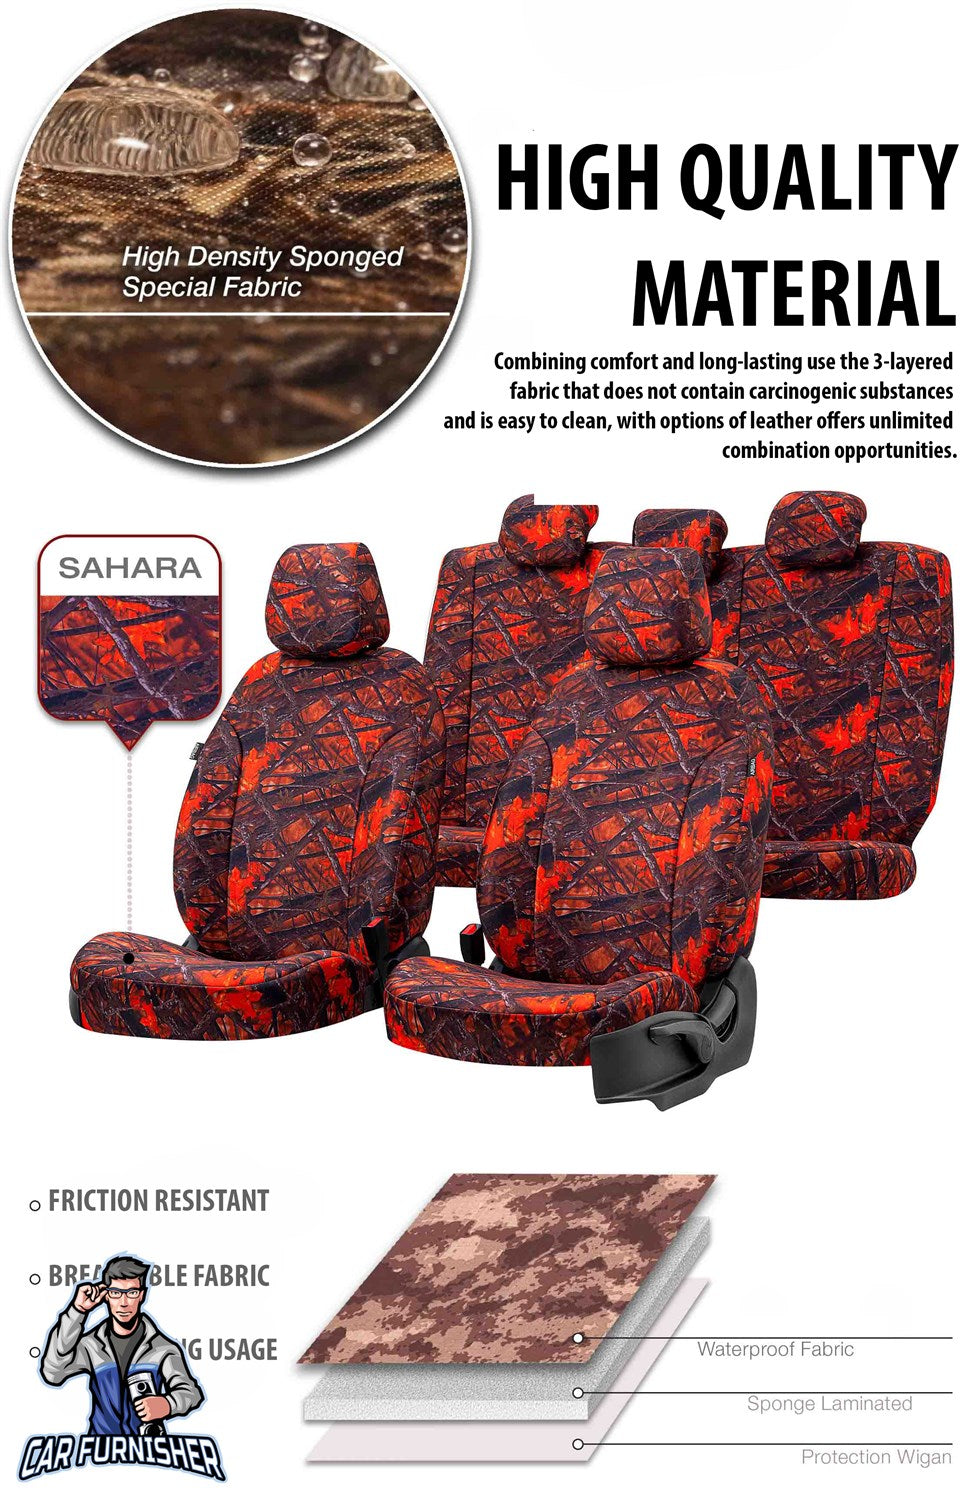 Dacia Sandero Seat Covers Camouflage Waterproof Design Montblanc Camo Waterproof Fabric